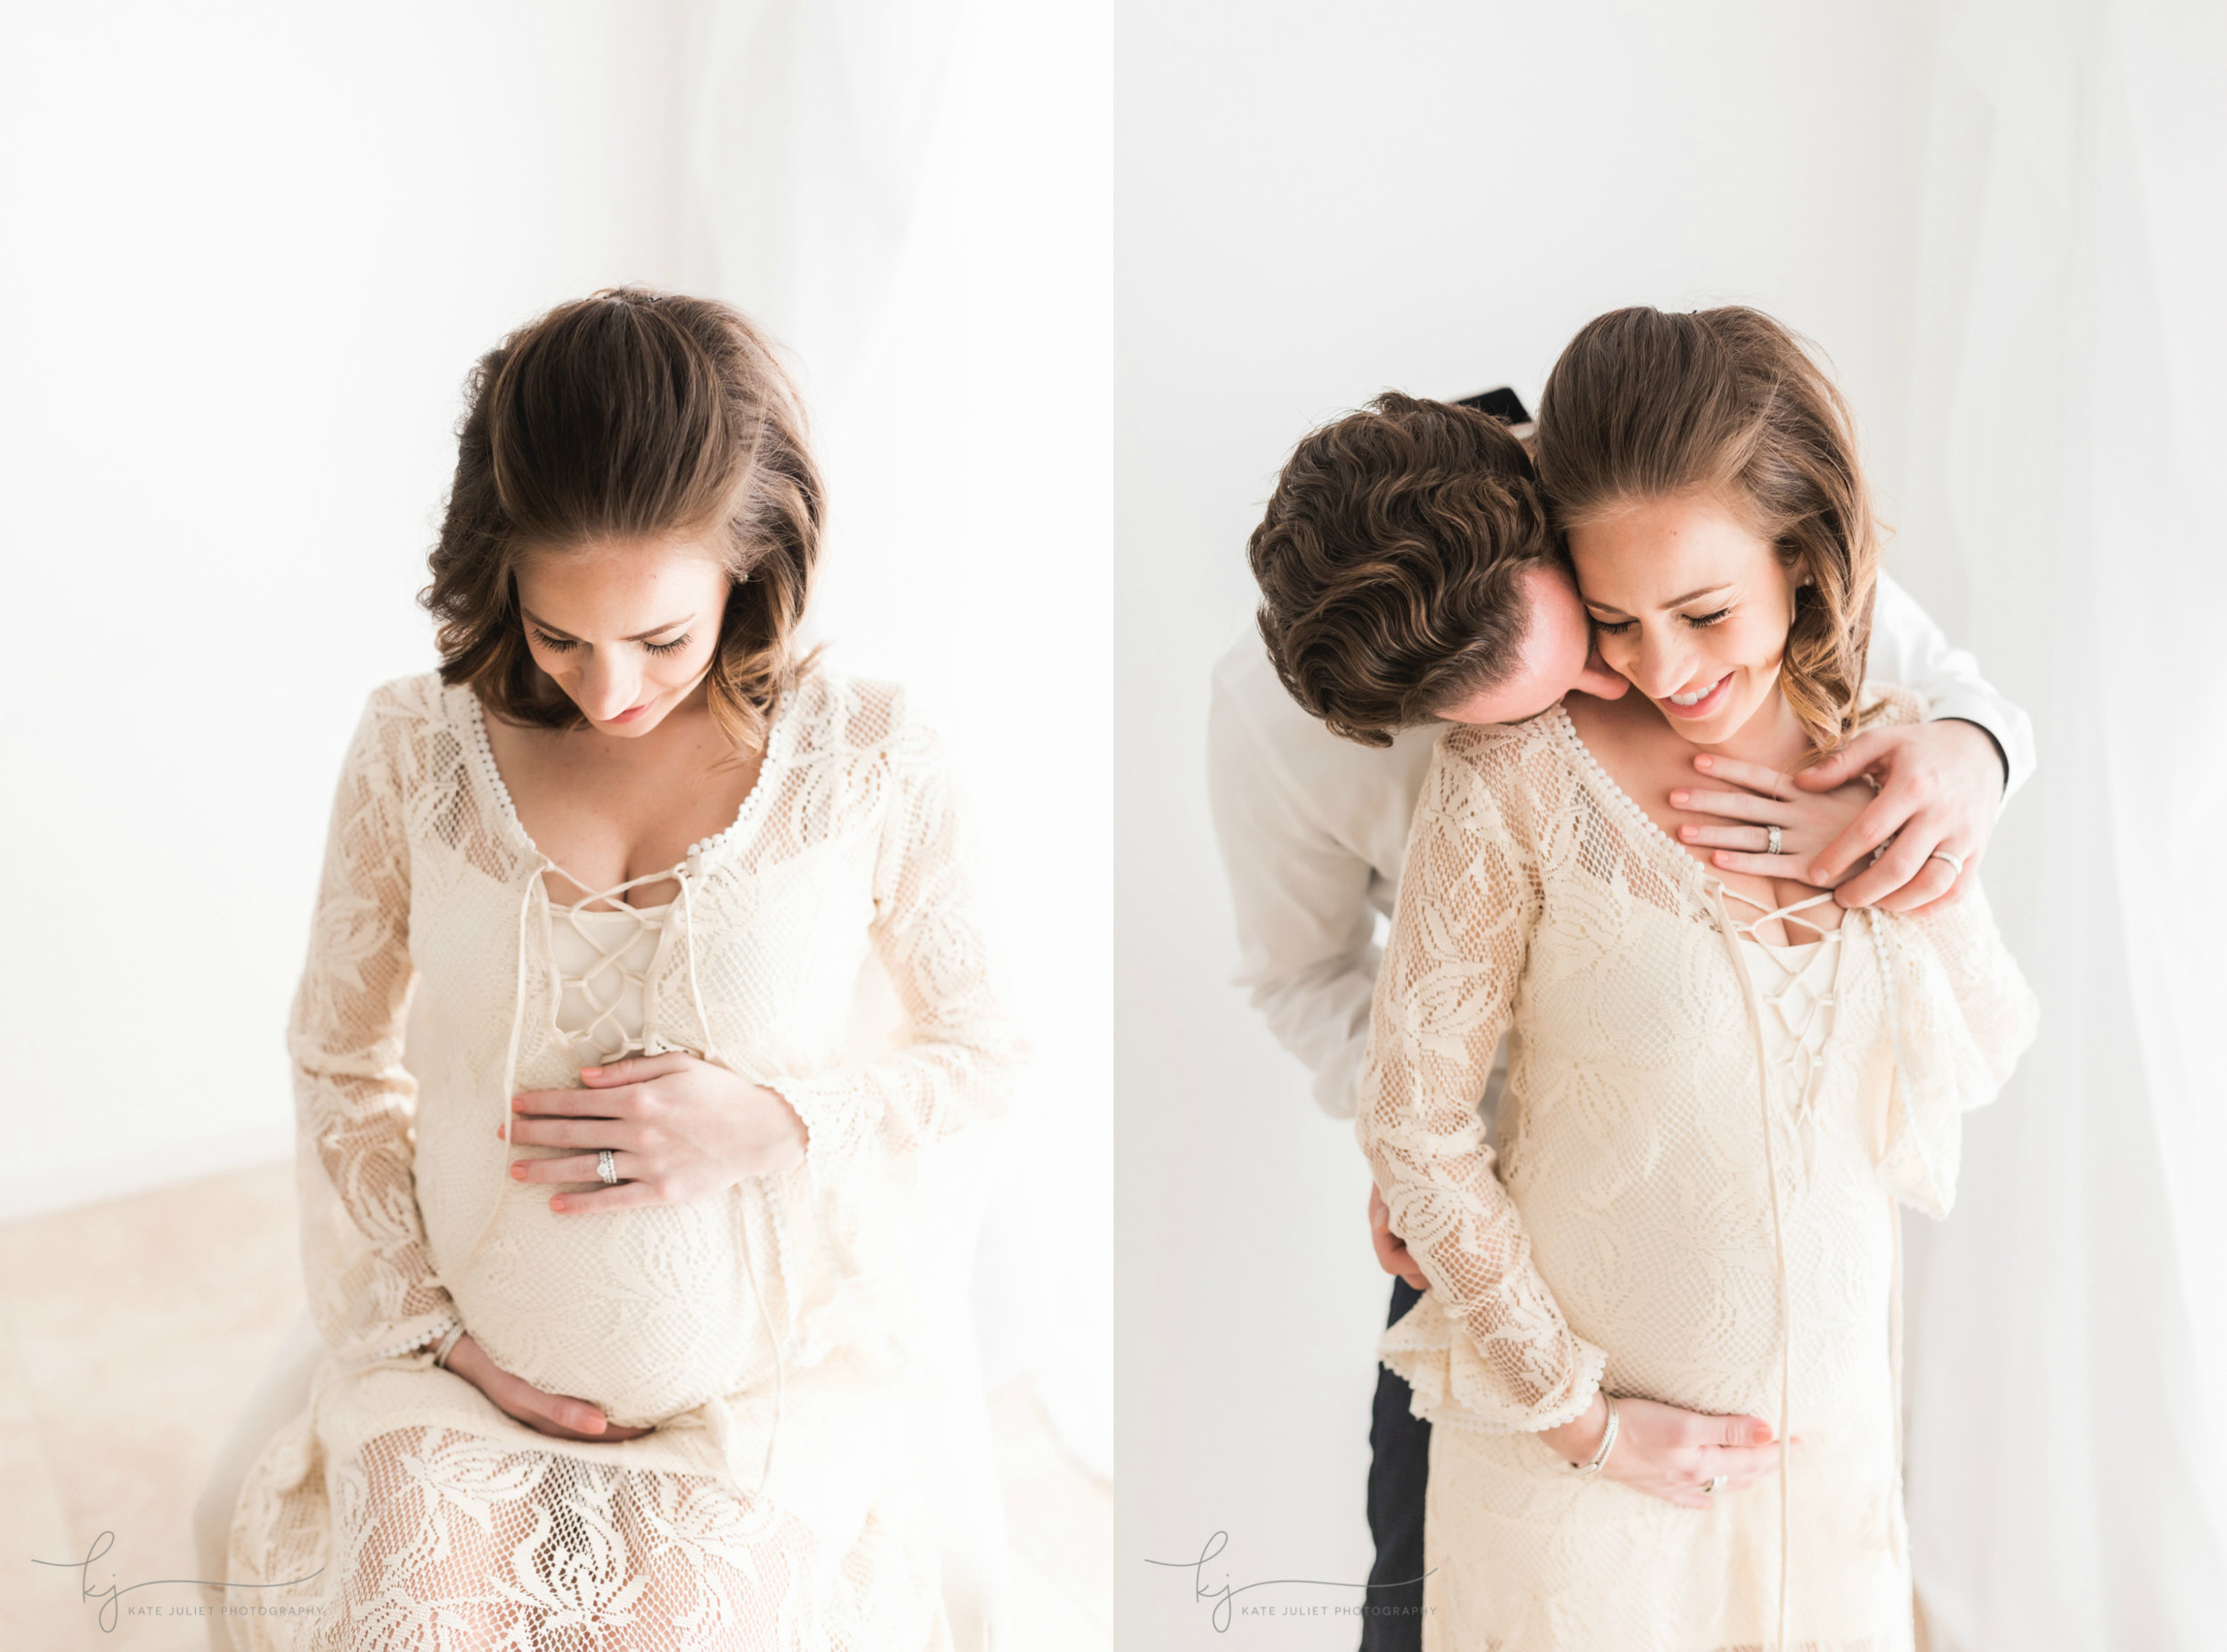 Alexandria VA Maternity Photographer | Kate Juliet Photography